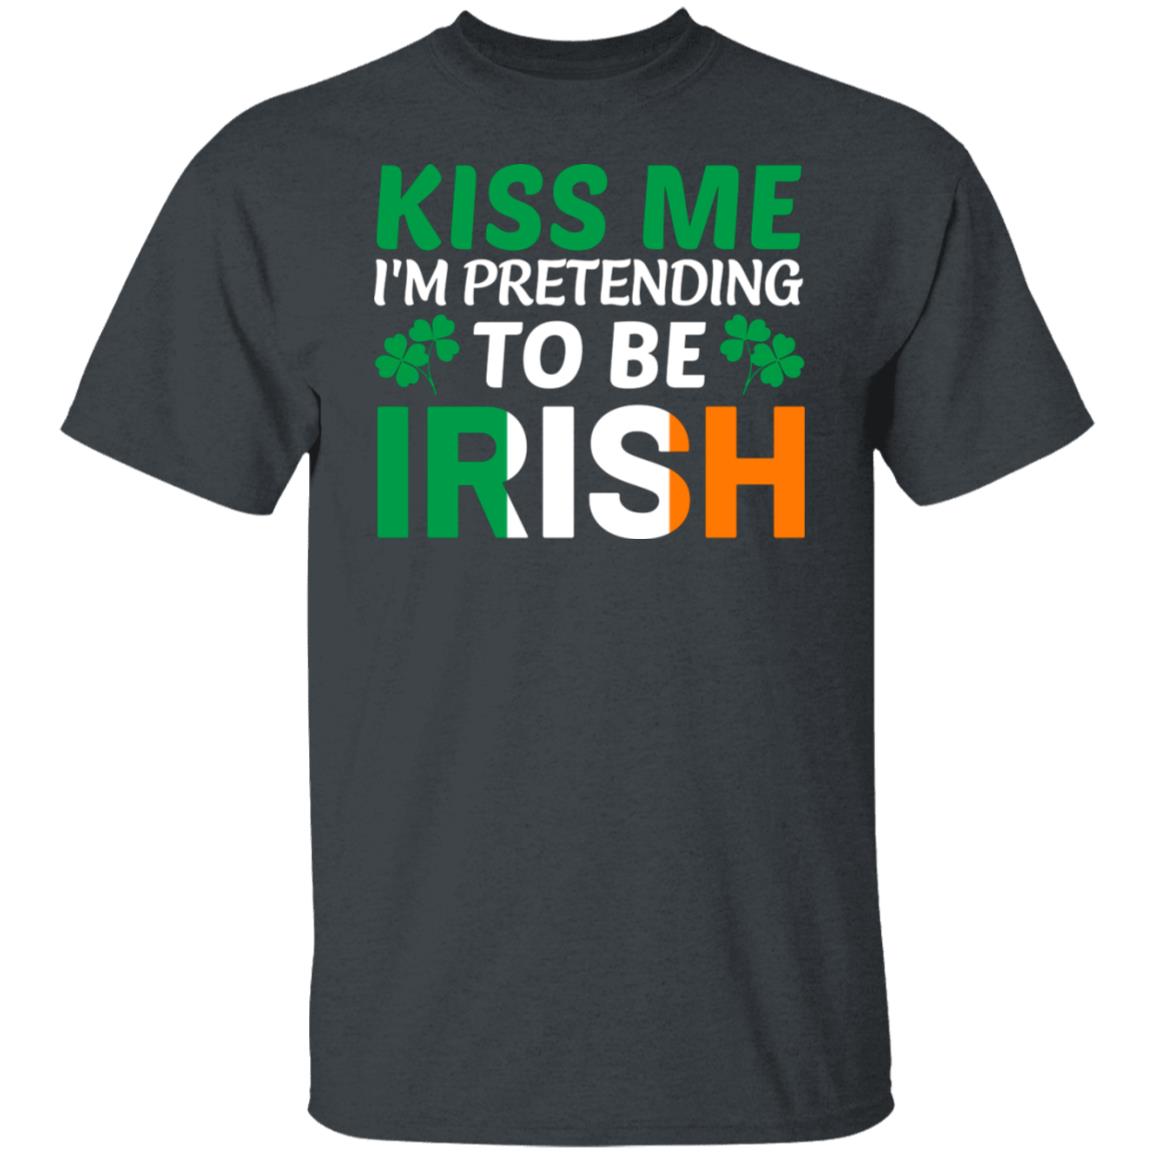 Kiss Me I'm Pretending to be Irish Funny Shirt